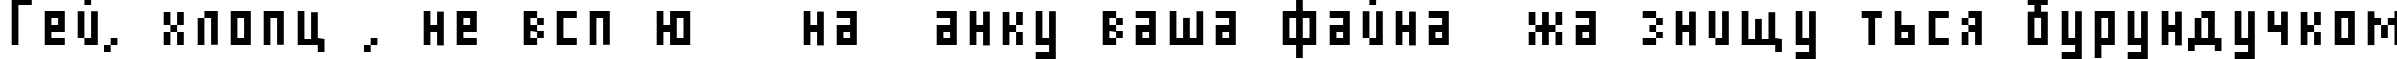 Пример написания шрифтом AuX DotBitC Cond текста на украинском